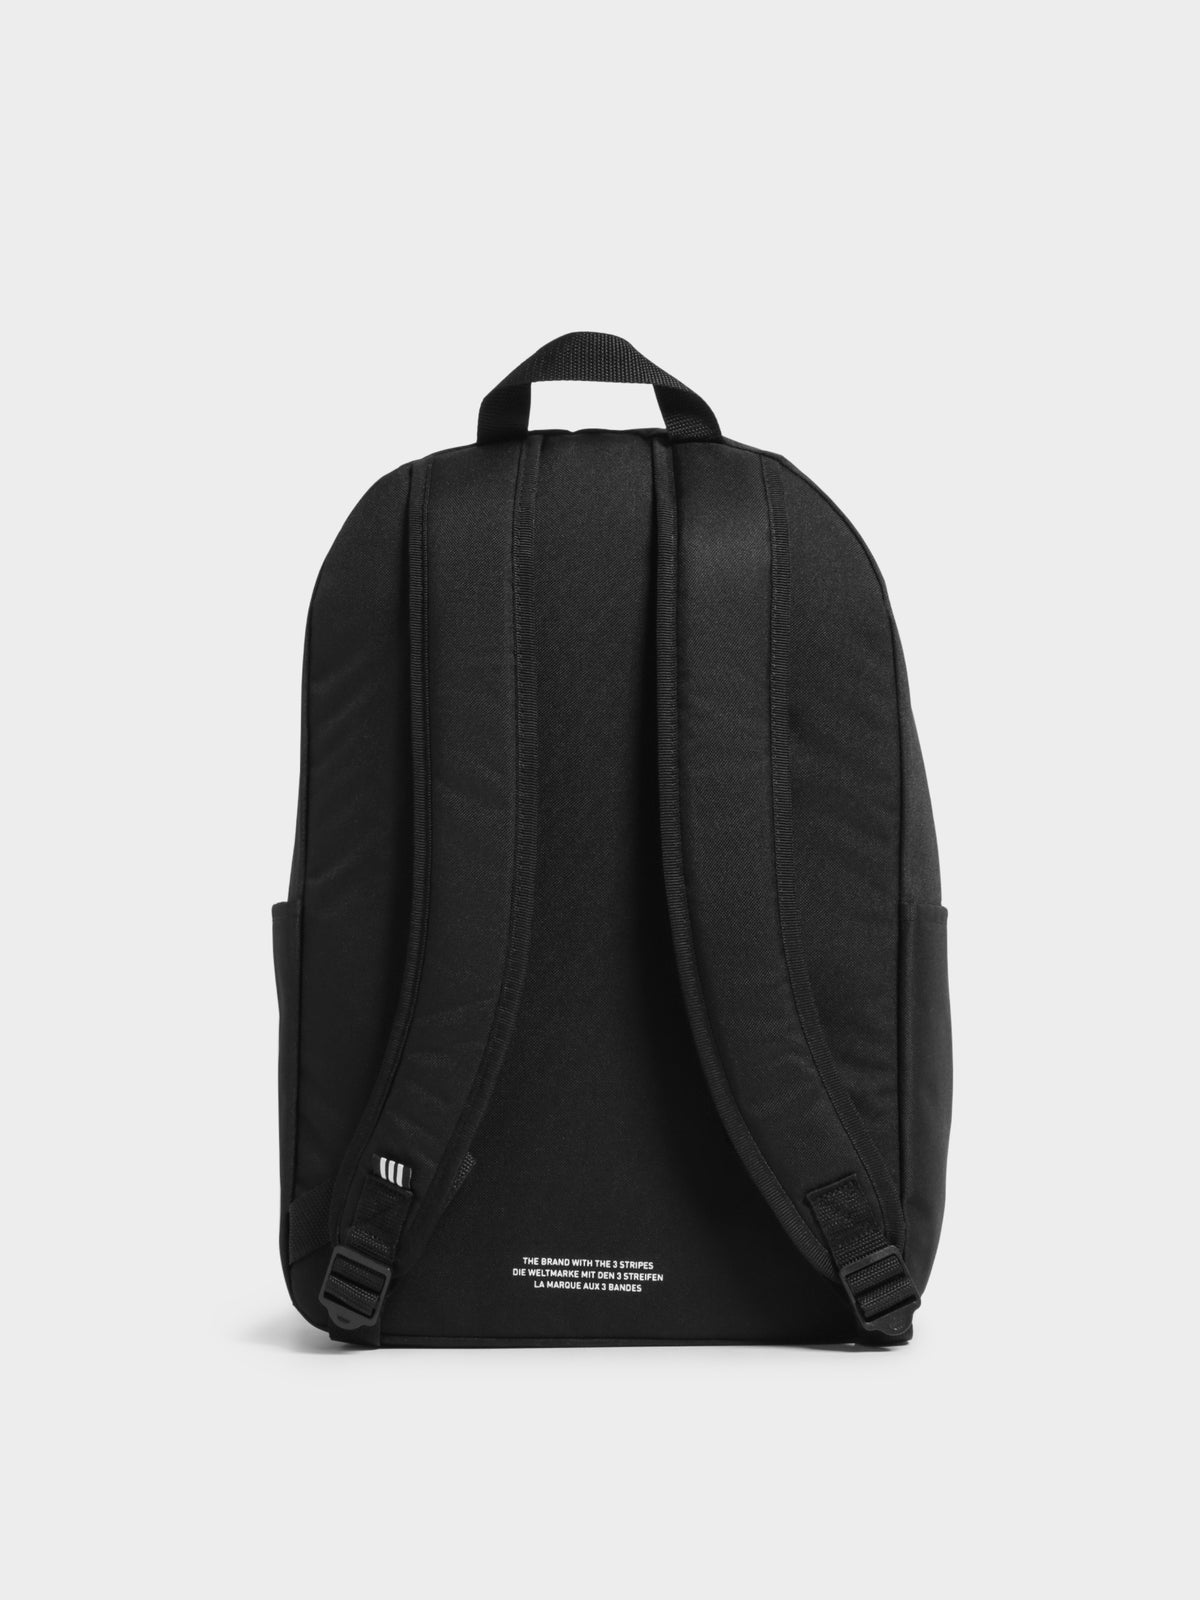 Adicolor Classic Backpack in Black